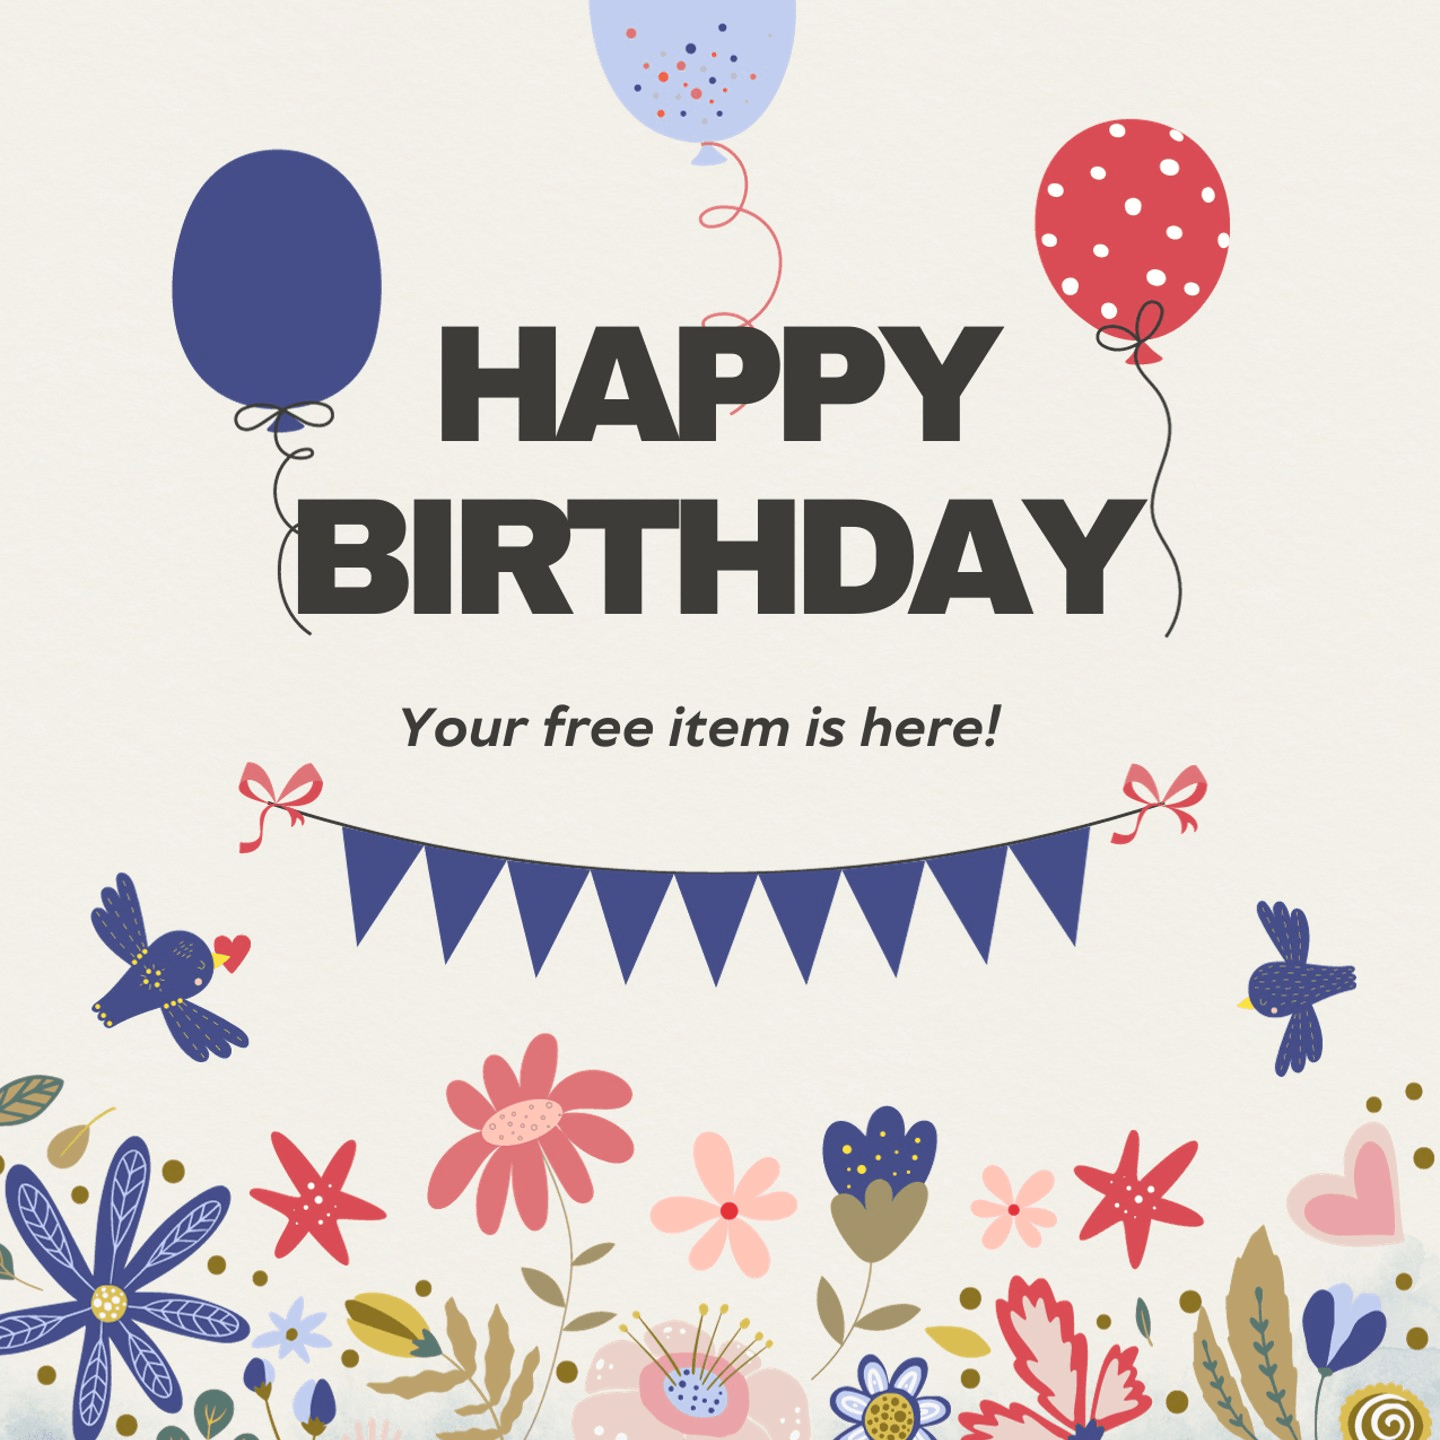 Free Item on your Birthday!